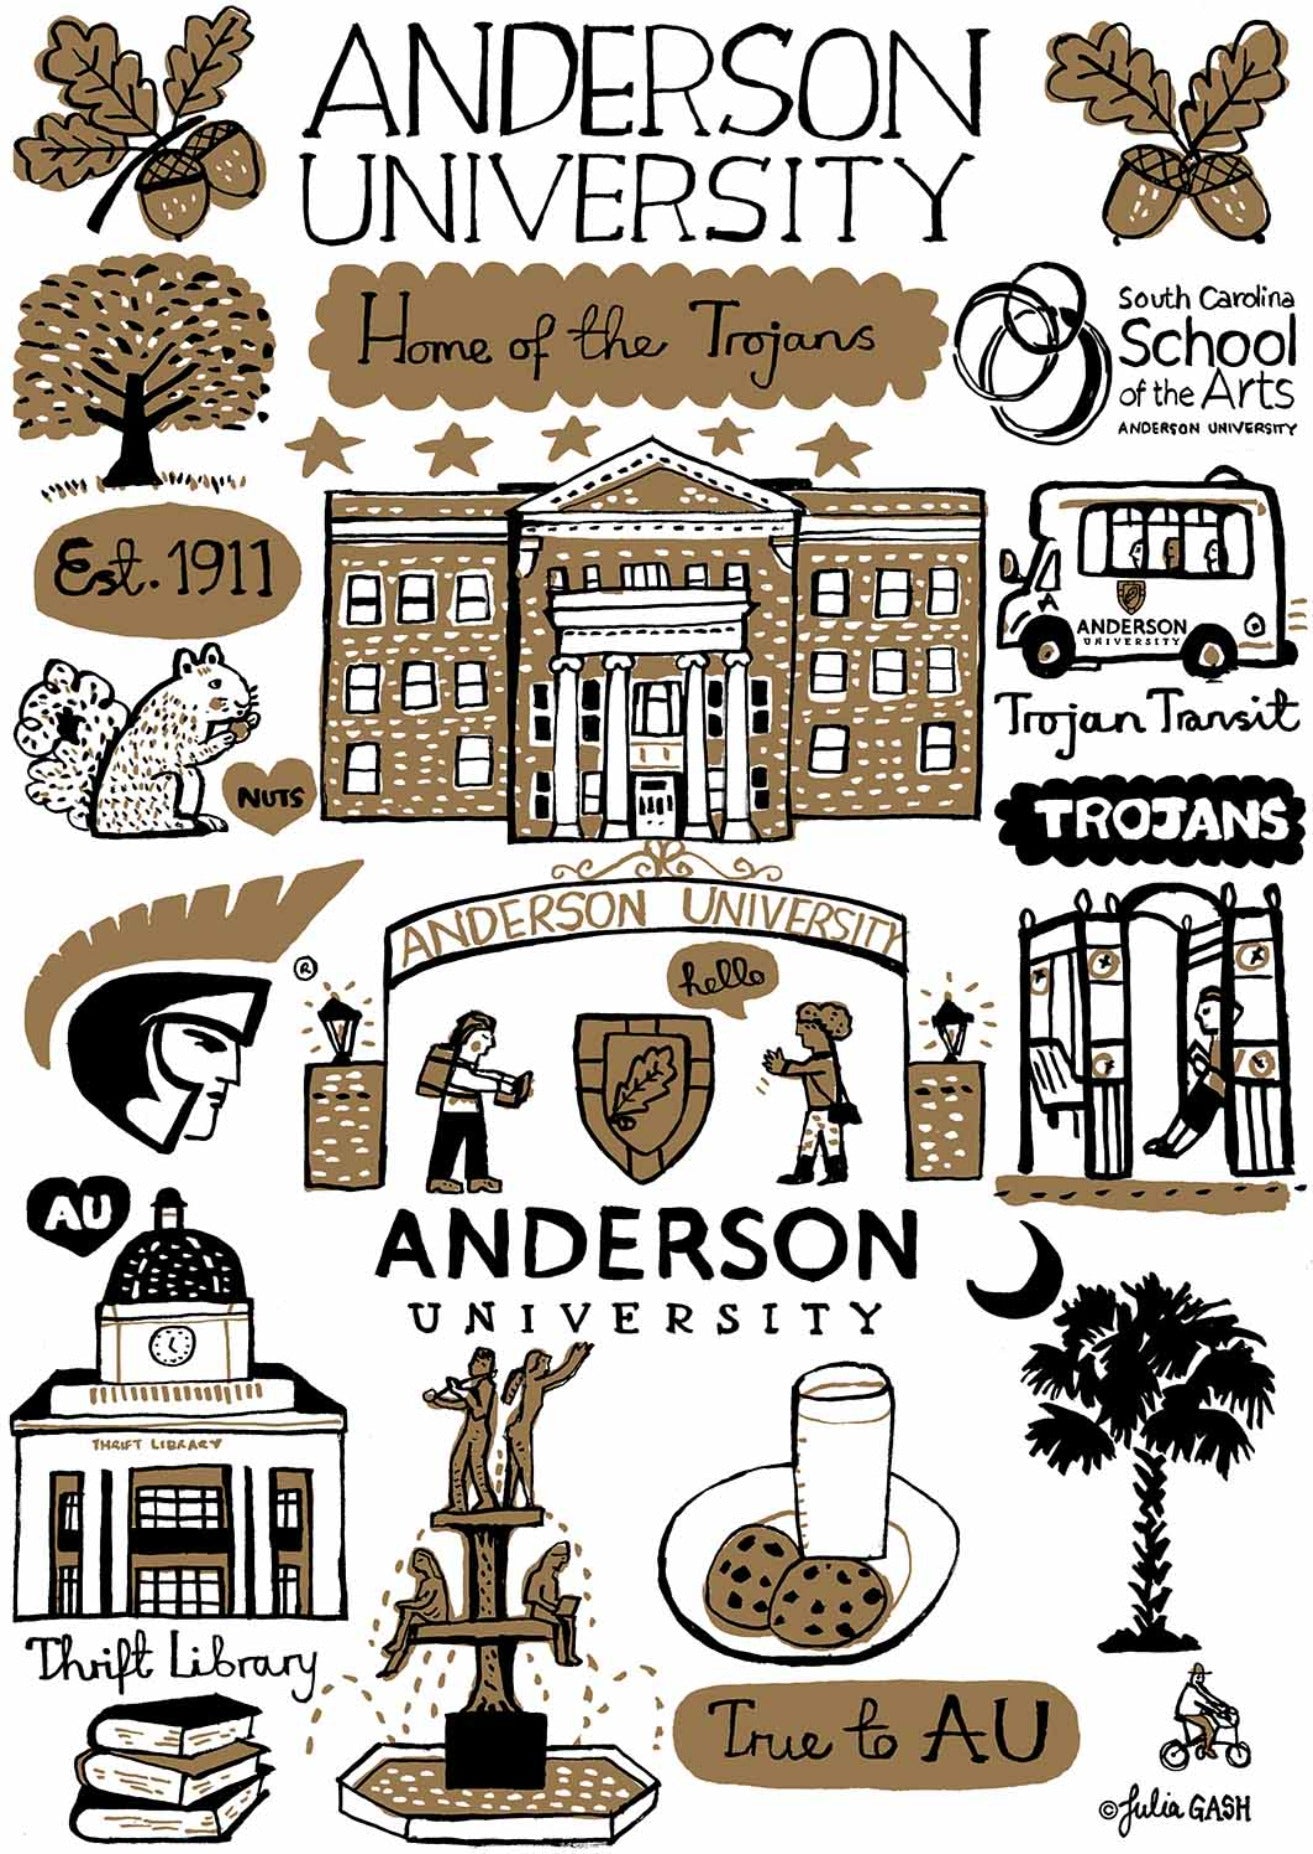 Anderson University Design by Julia Gash